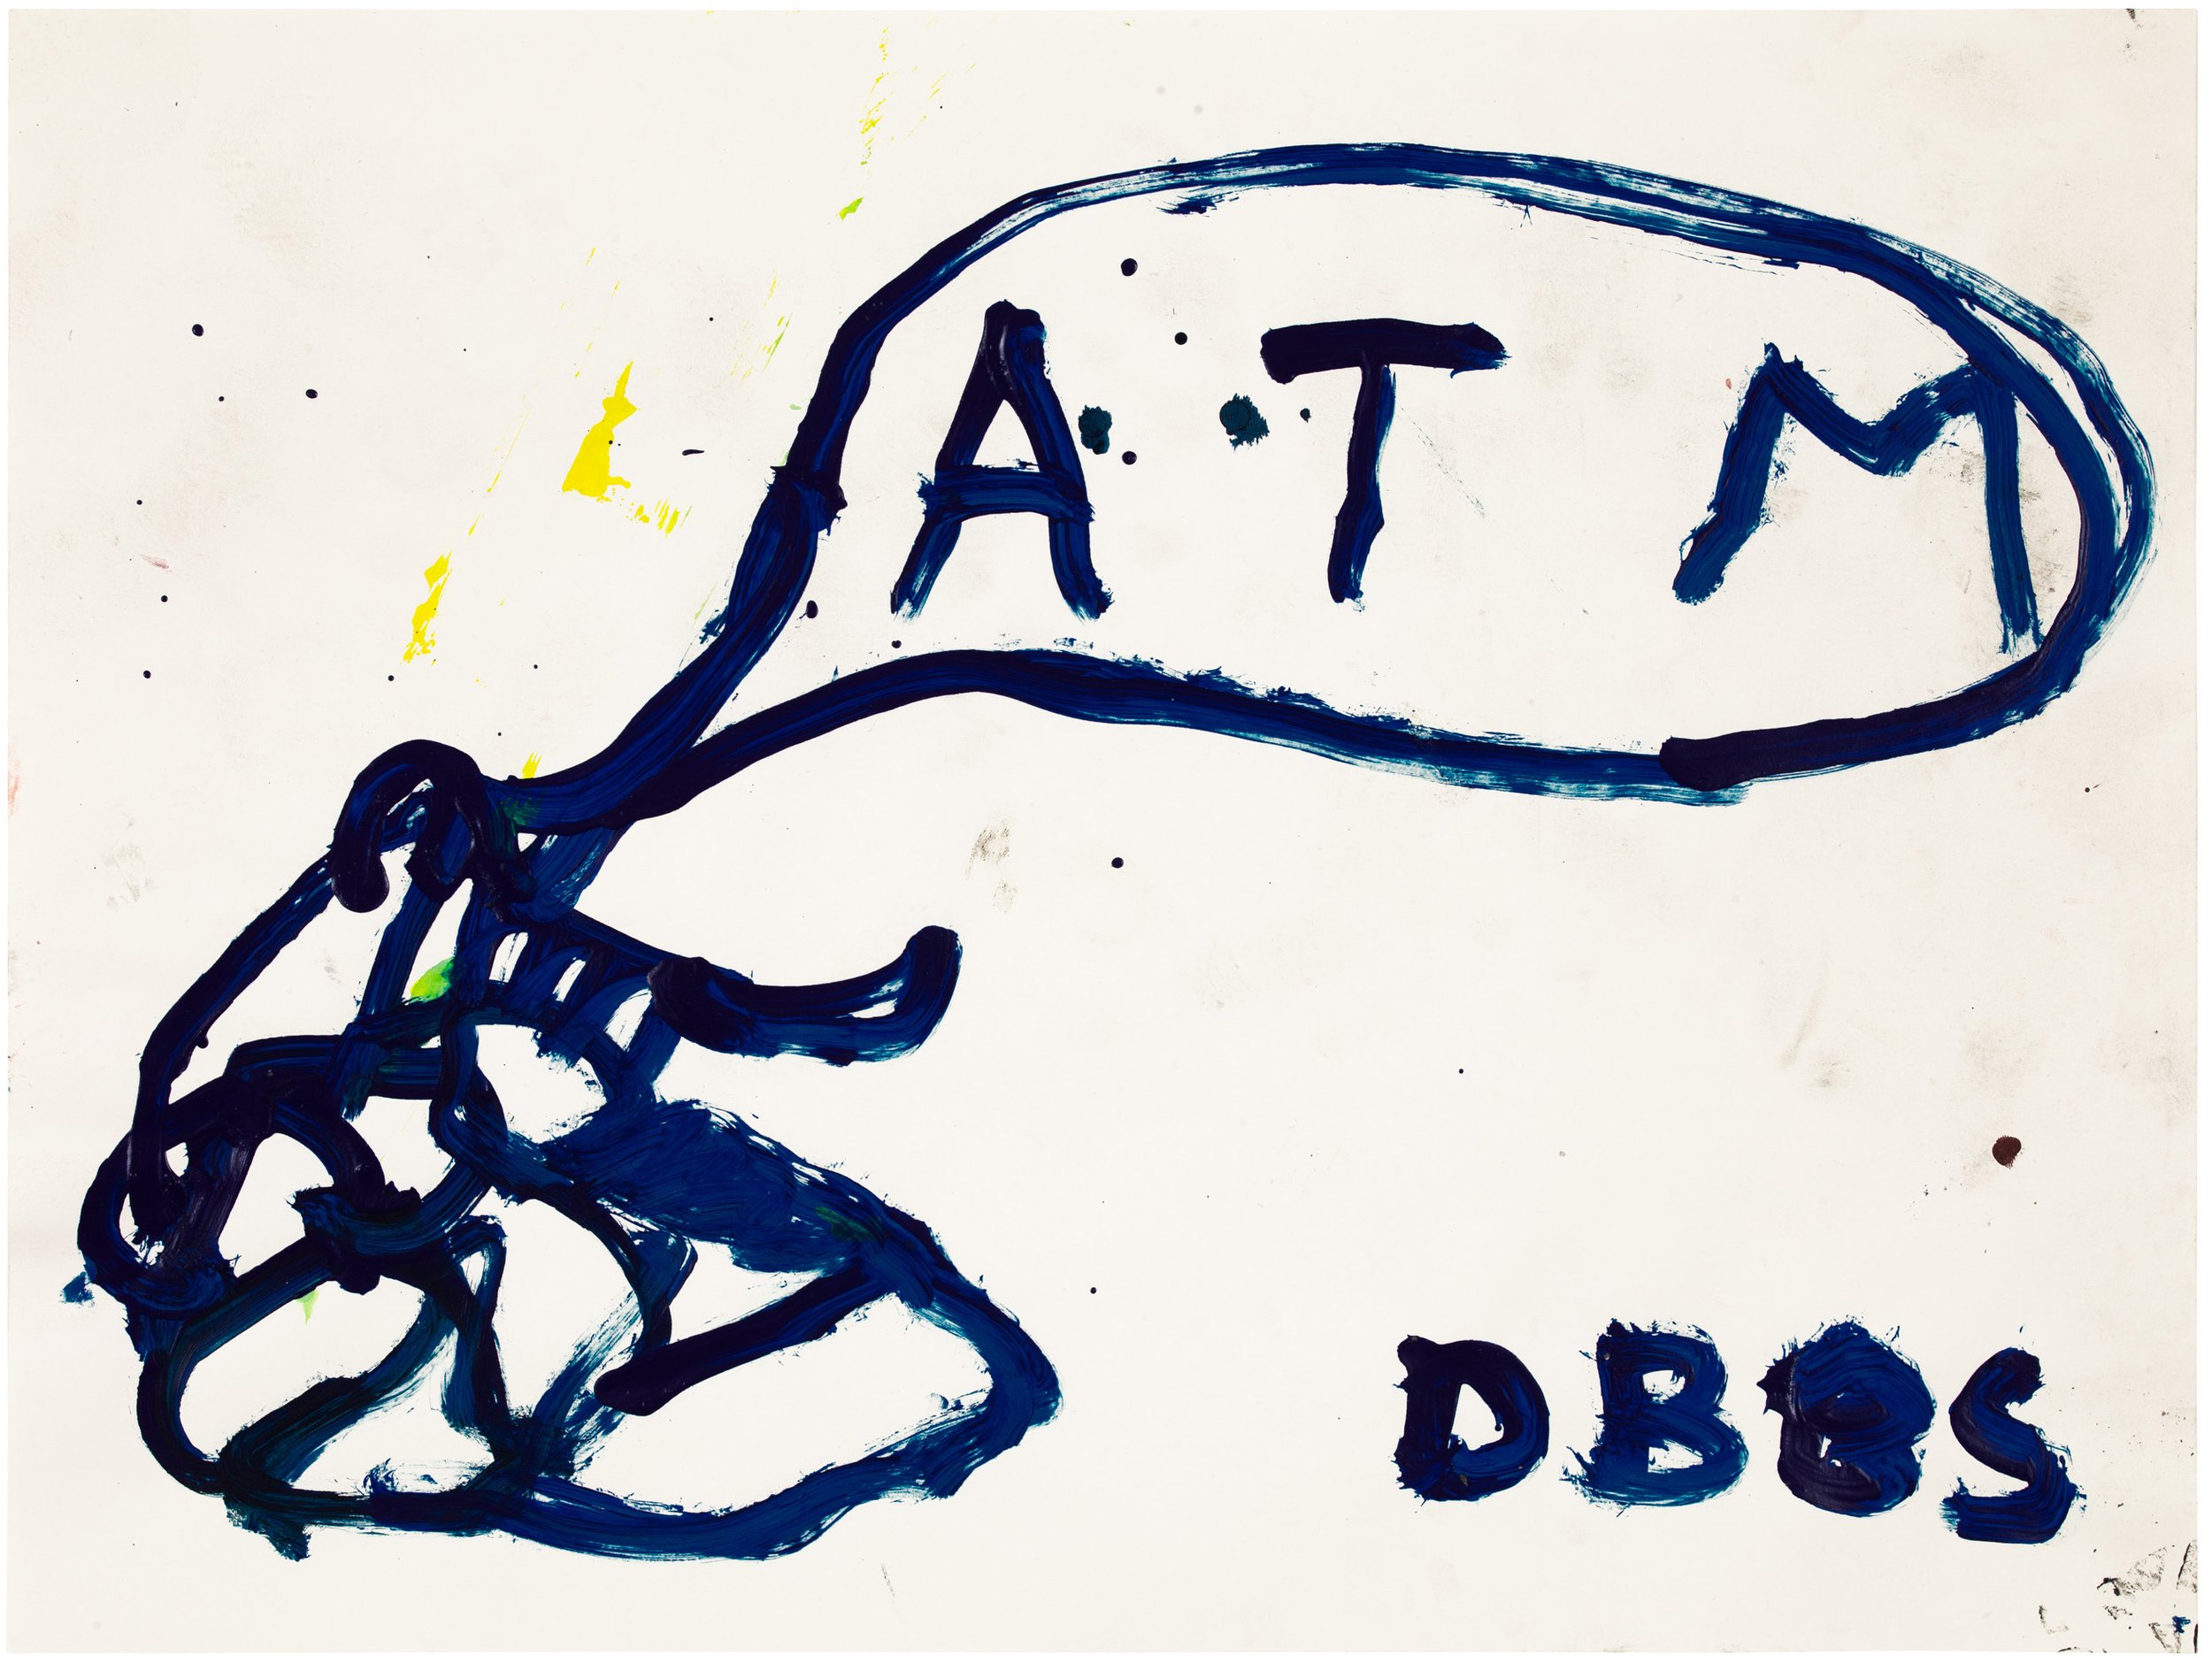  Drew Beattie and Ben Shepard DBBS-DRW-2021-191 2021 acrylic on paper 18 x 24 inches 